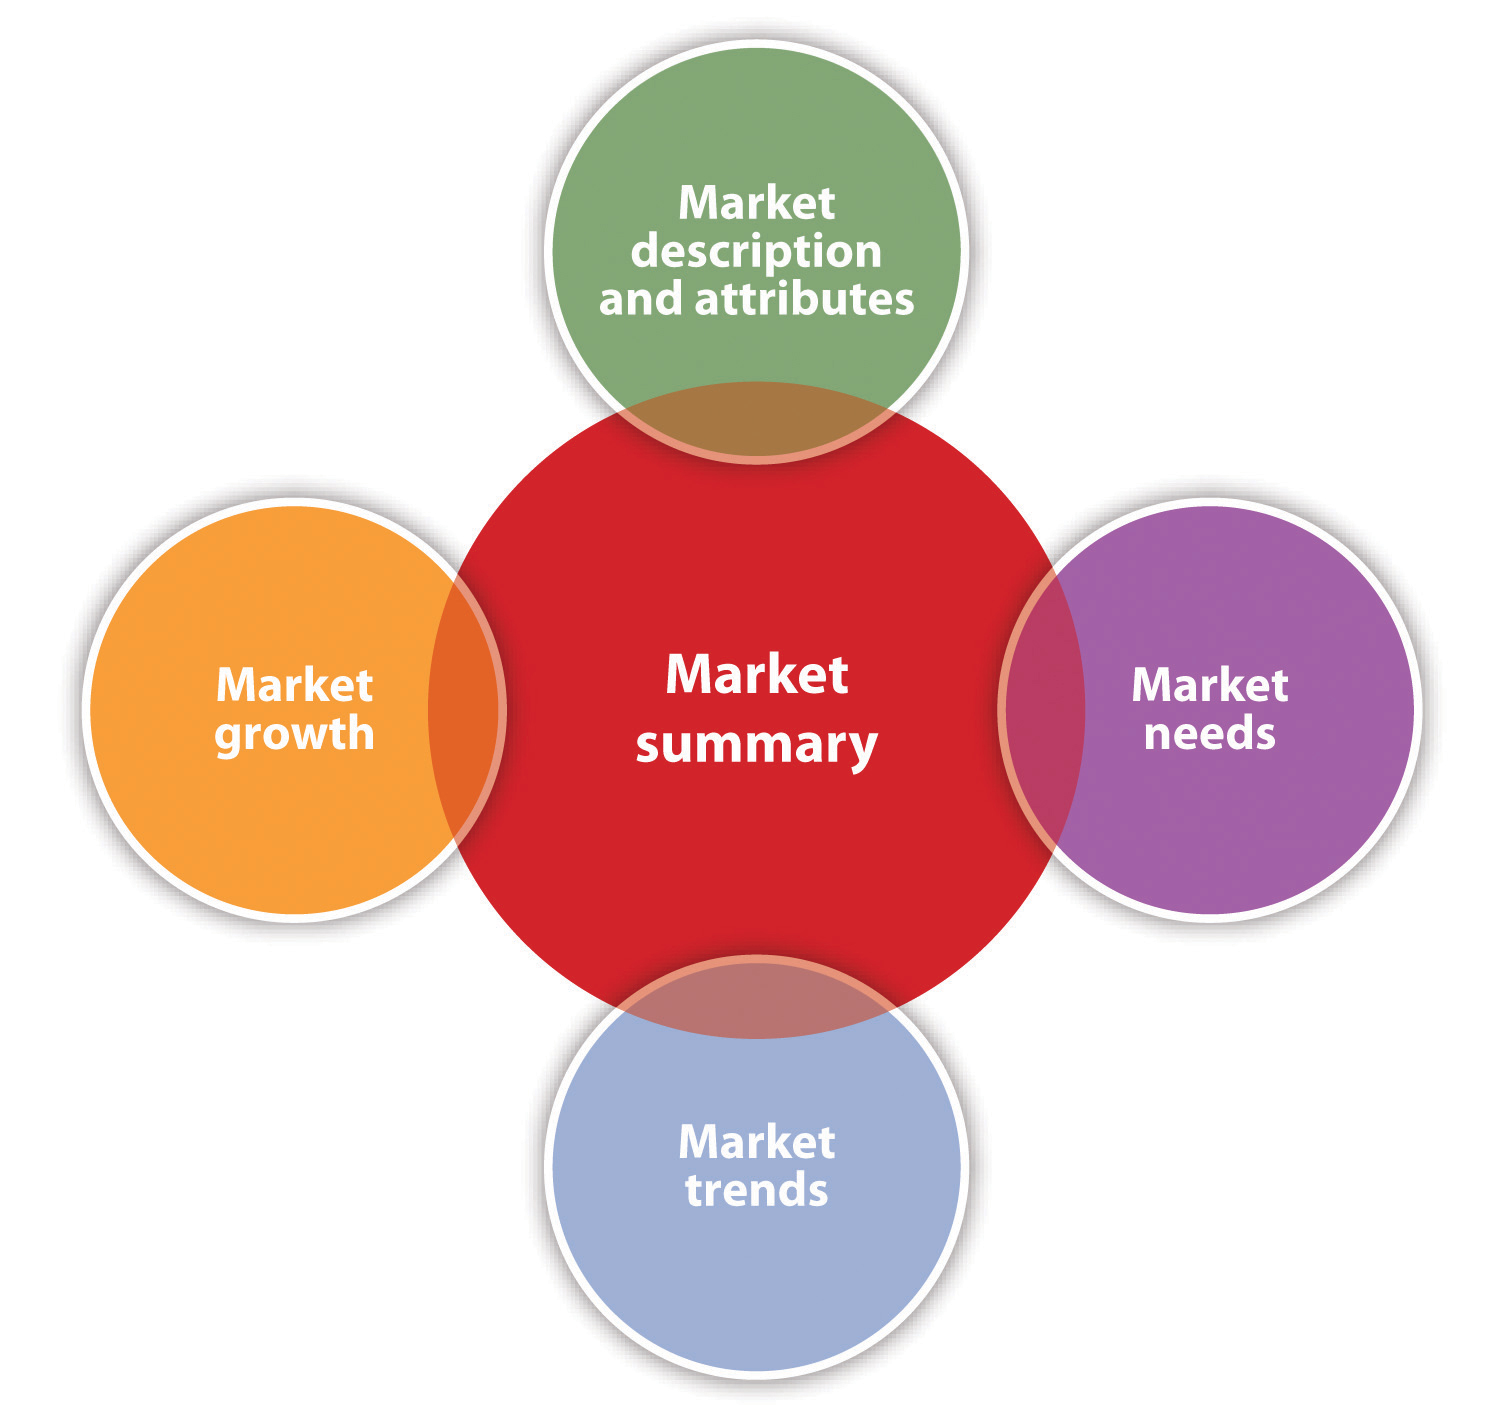 Market summary: market description and attributes, market growth, market trends, and market needs